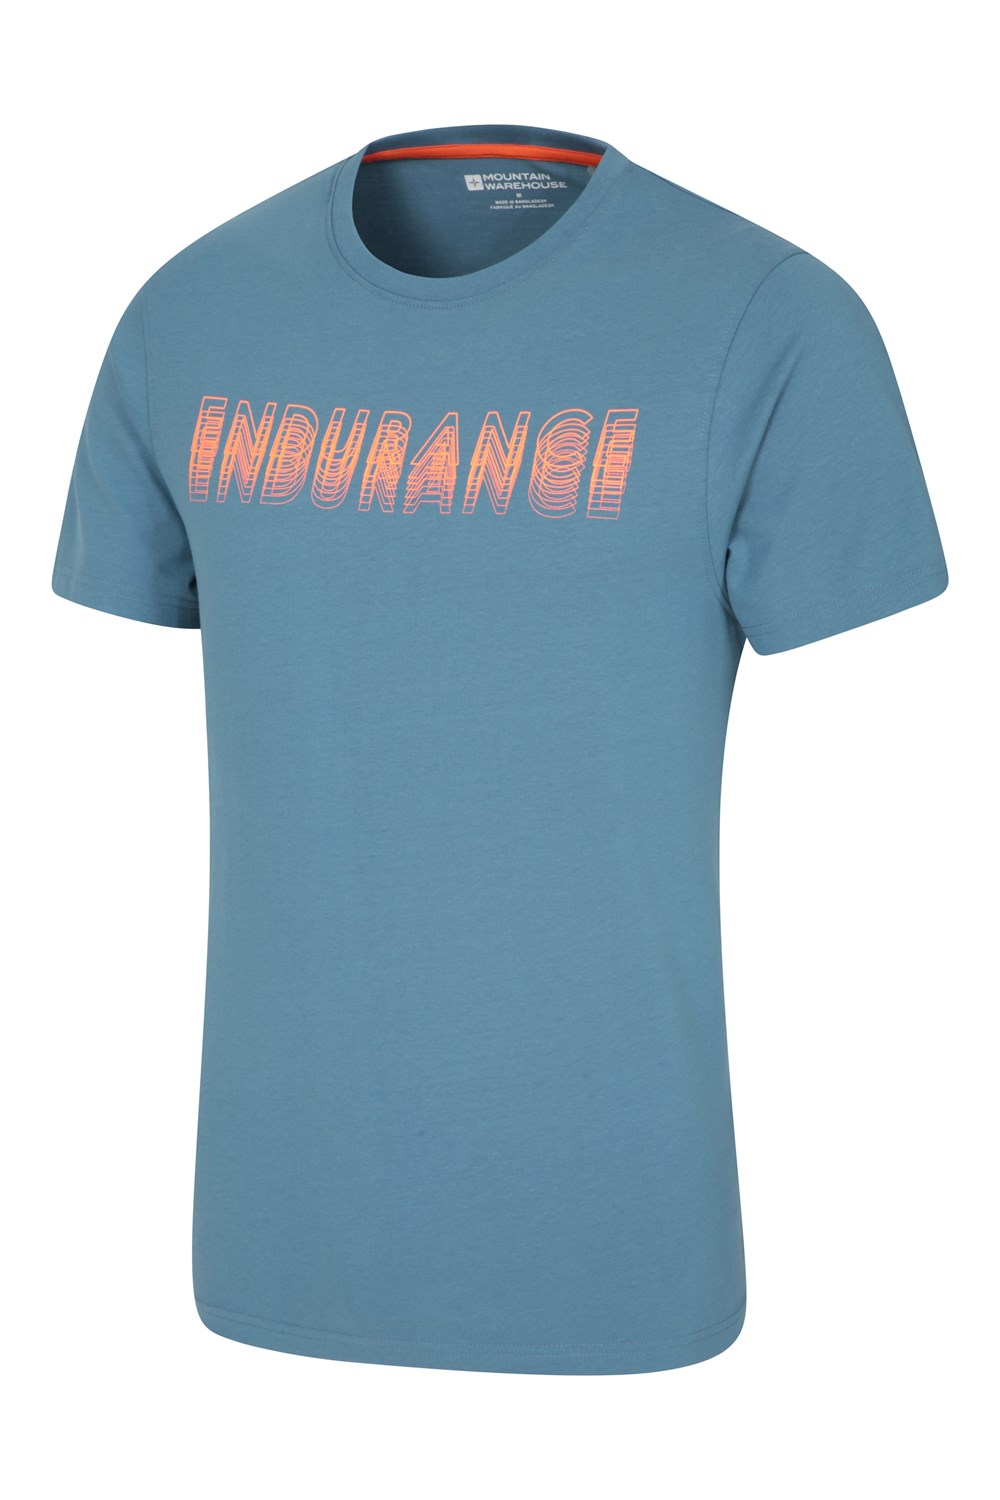 Mountain Warehouse Men Endurance Tee Tshirt | eBay